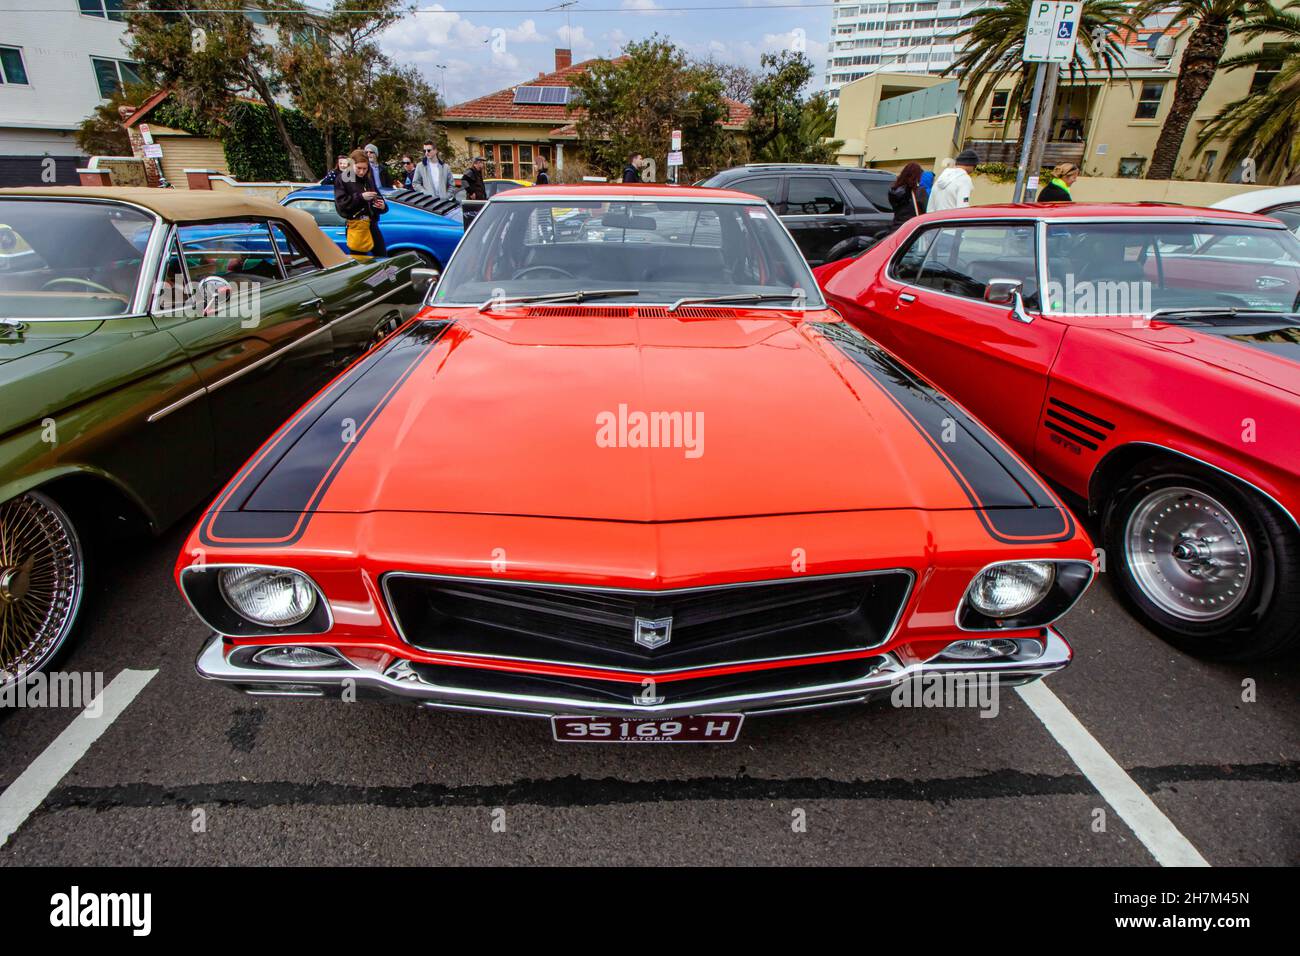 Holden classic car, red or orange. Melbourne Car show Father's day. St Kilda, Victoria, Australia Stock Photo